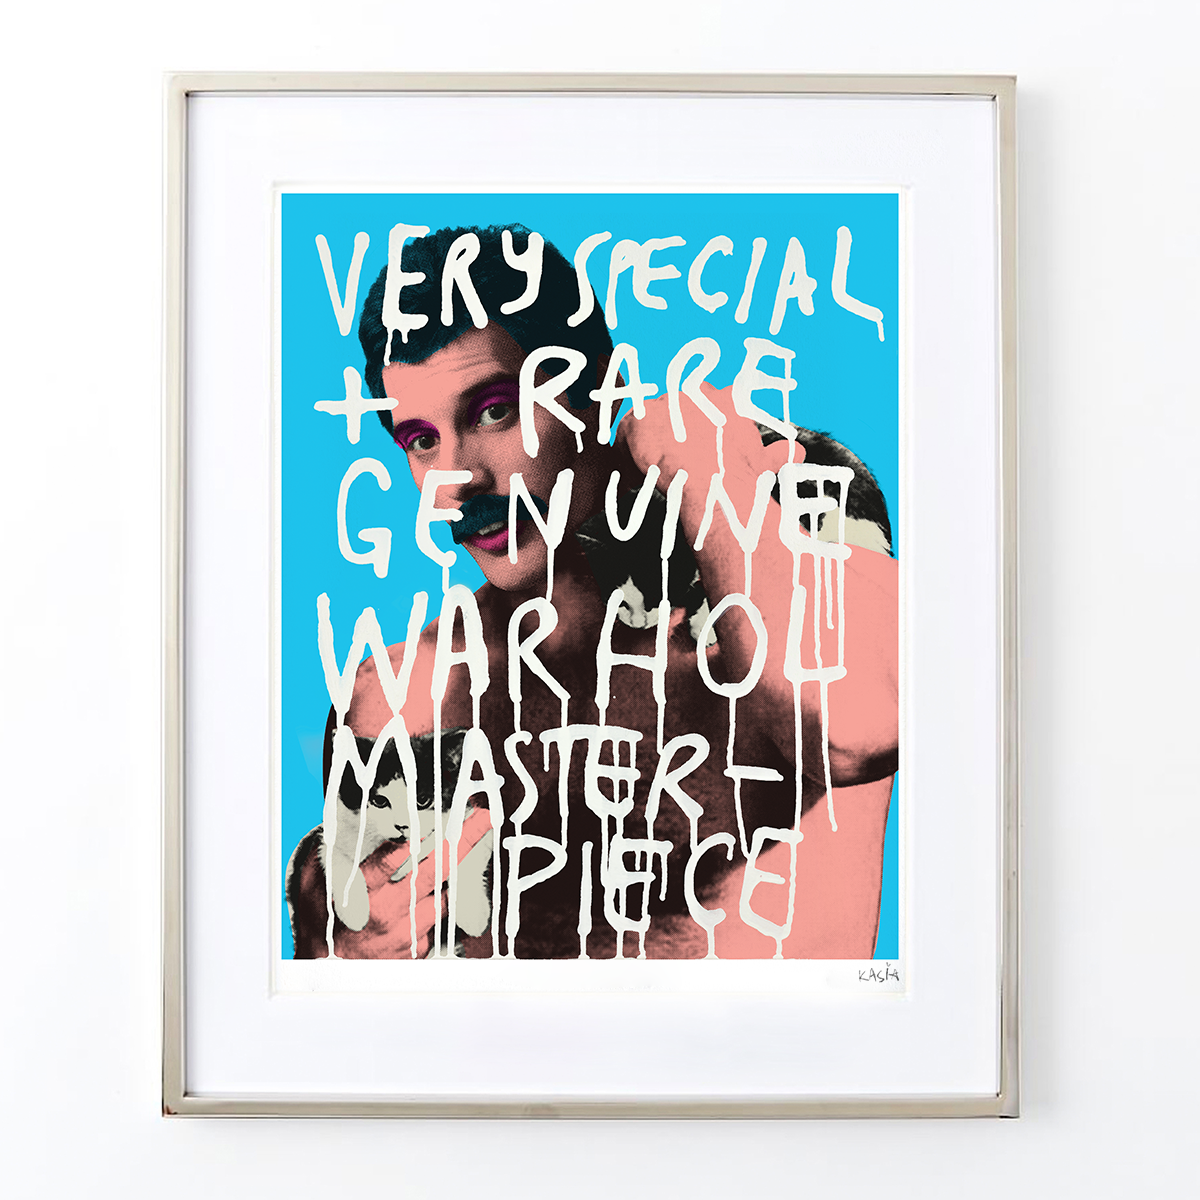 Very Special + Rare Genuine Warhol Masterpiece (Freddie Mercury with Kittens)